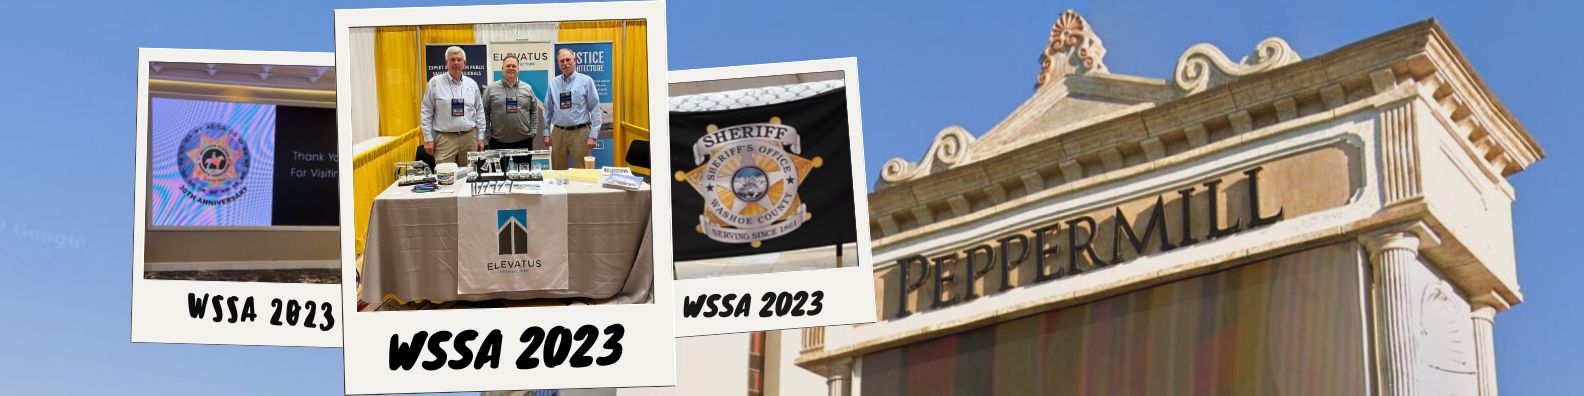 Western States Sheriffs’ Association